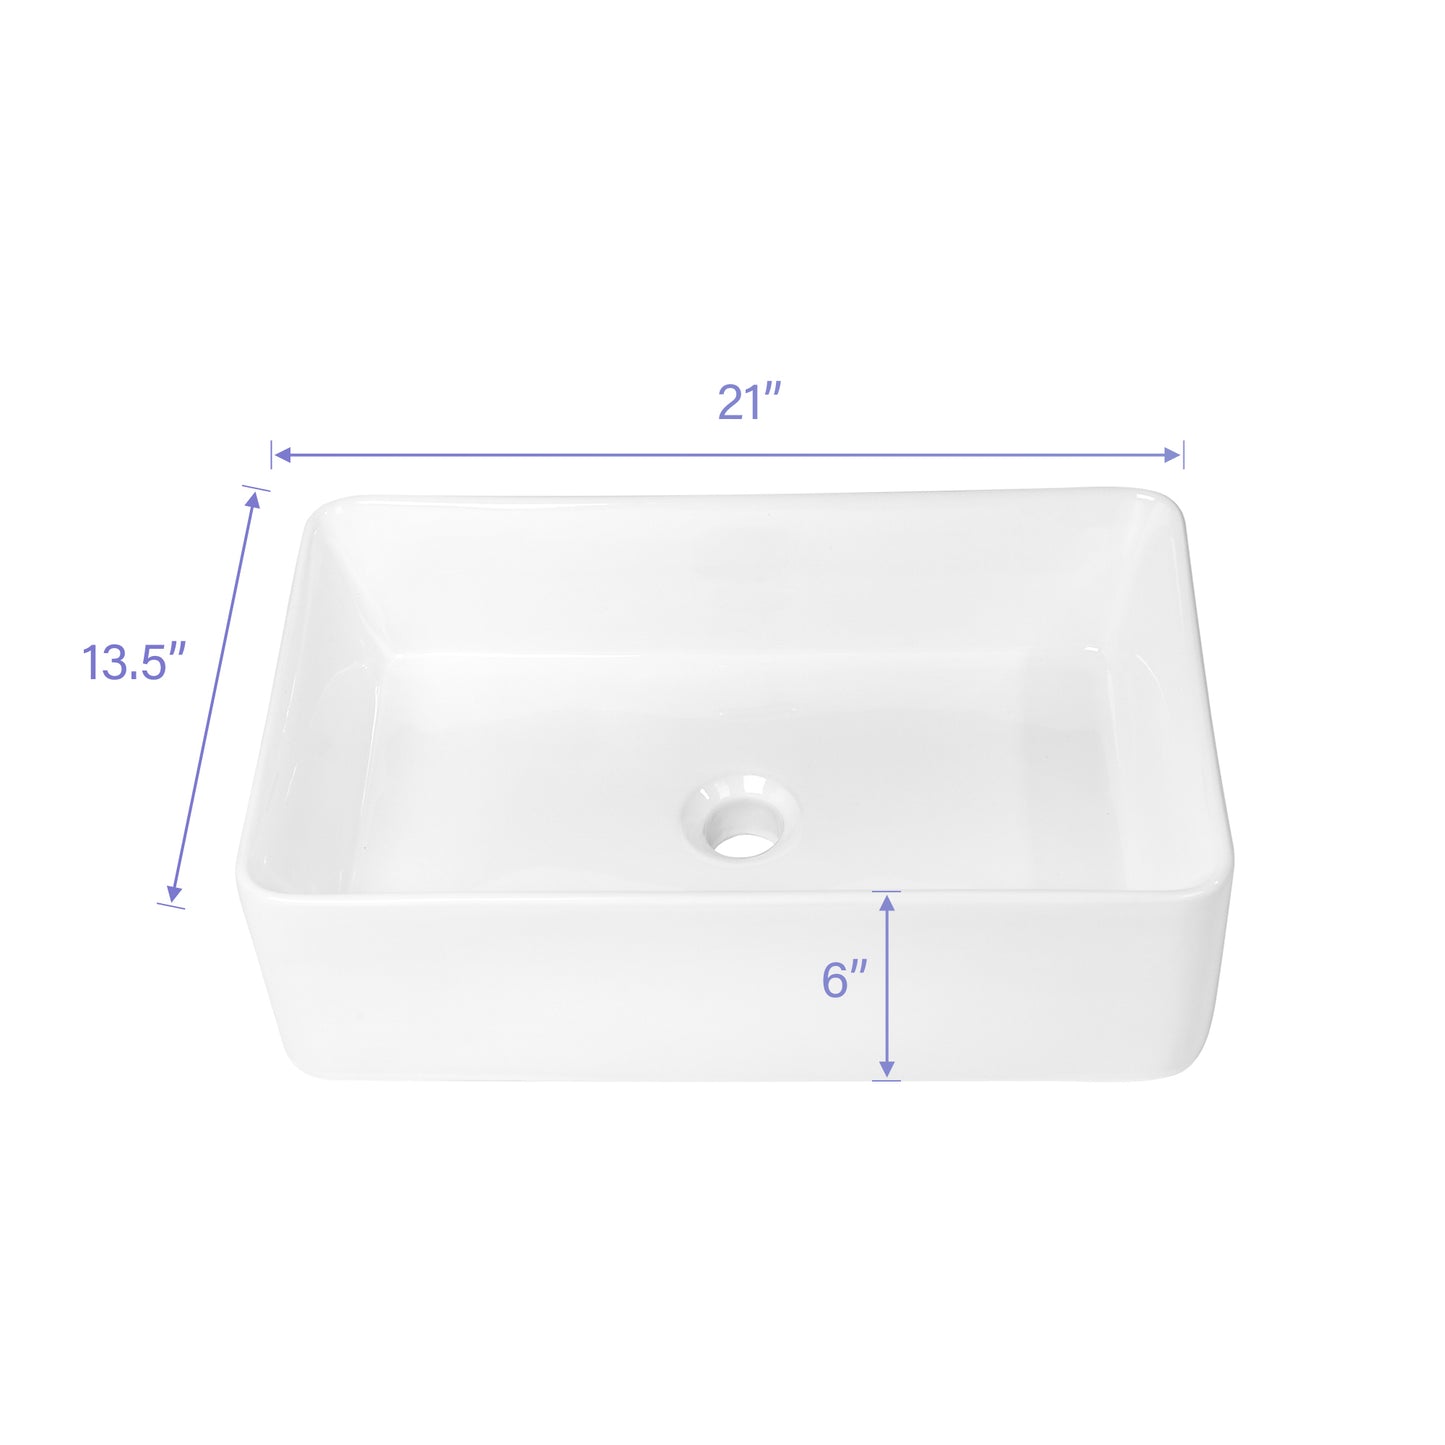 21"x14" White Ceramic Rectangular Vessel Bathroom Sink